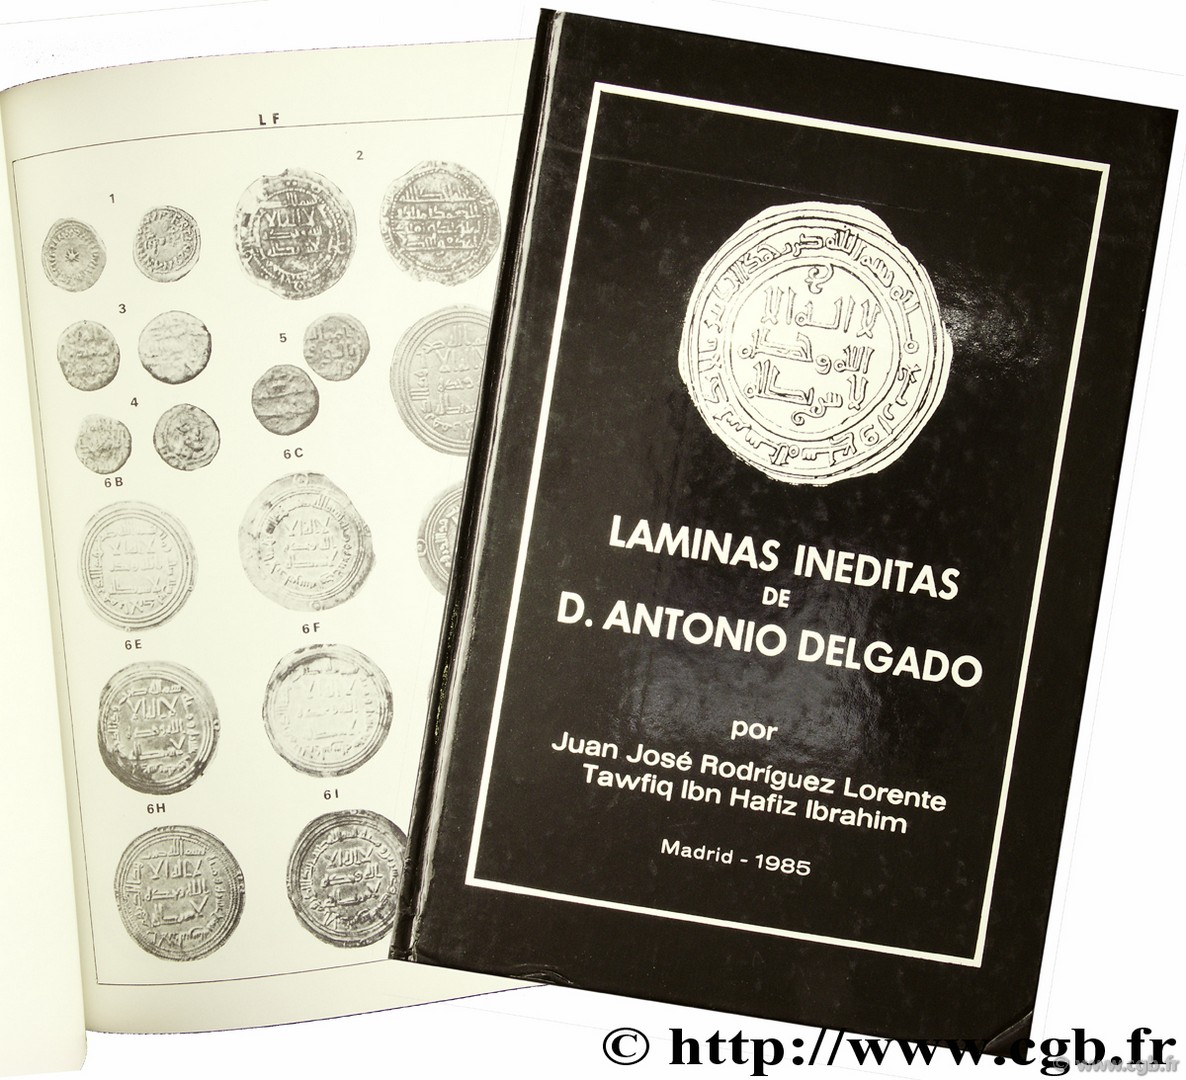 Laminas ineditas de D. Antonio Delgado RODRIGUEZ LORENTE J.-J., IBN HAFIZ IBRAHIM T.